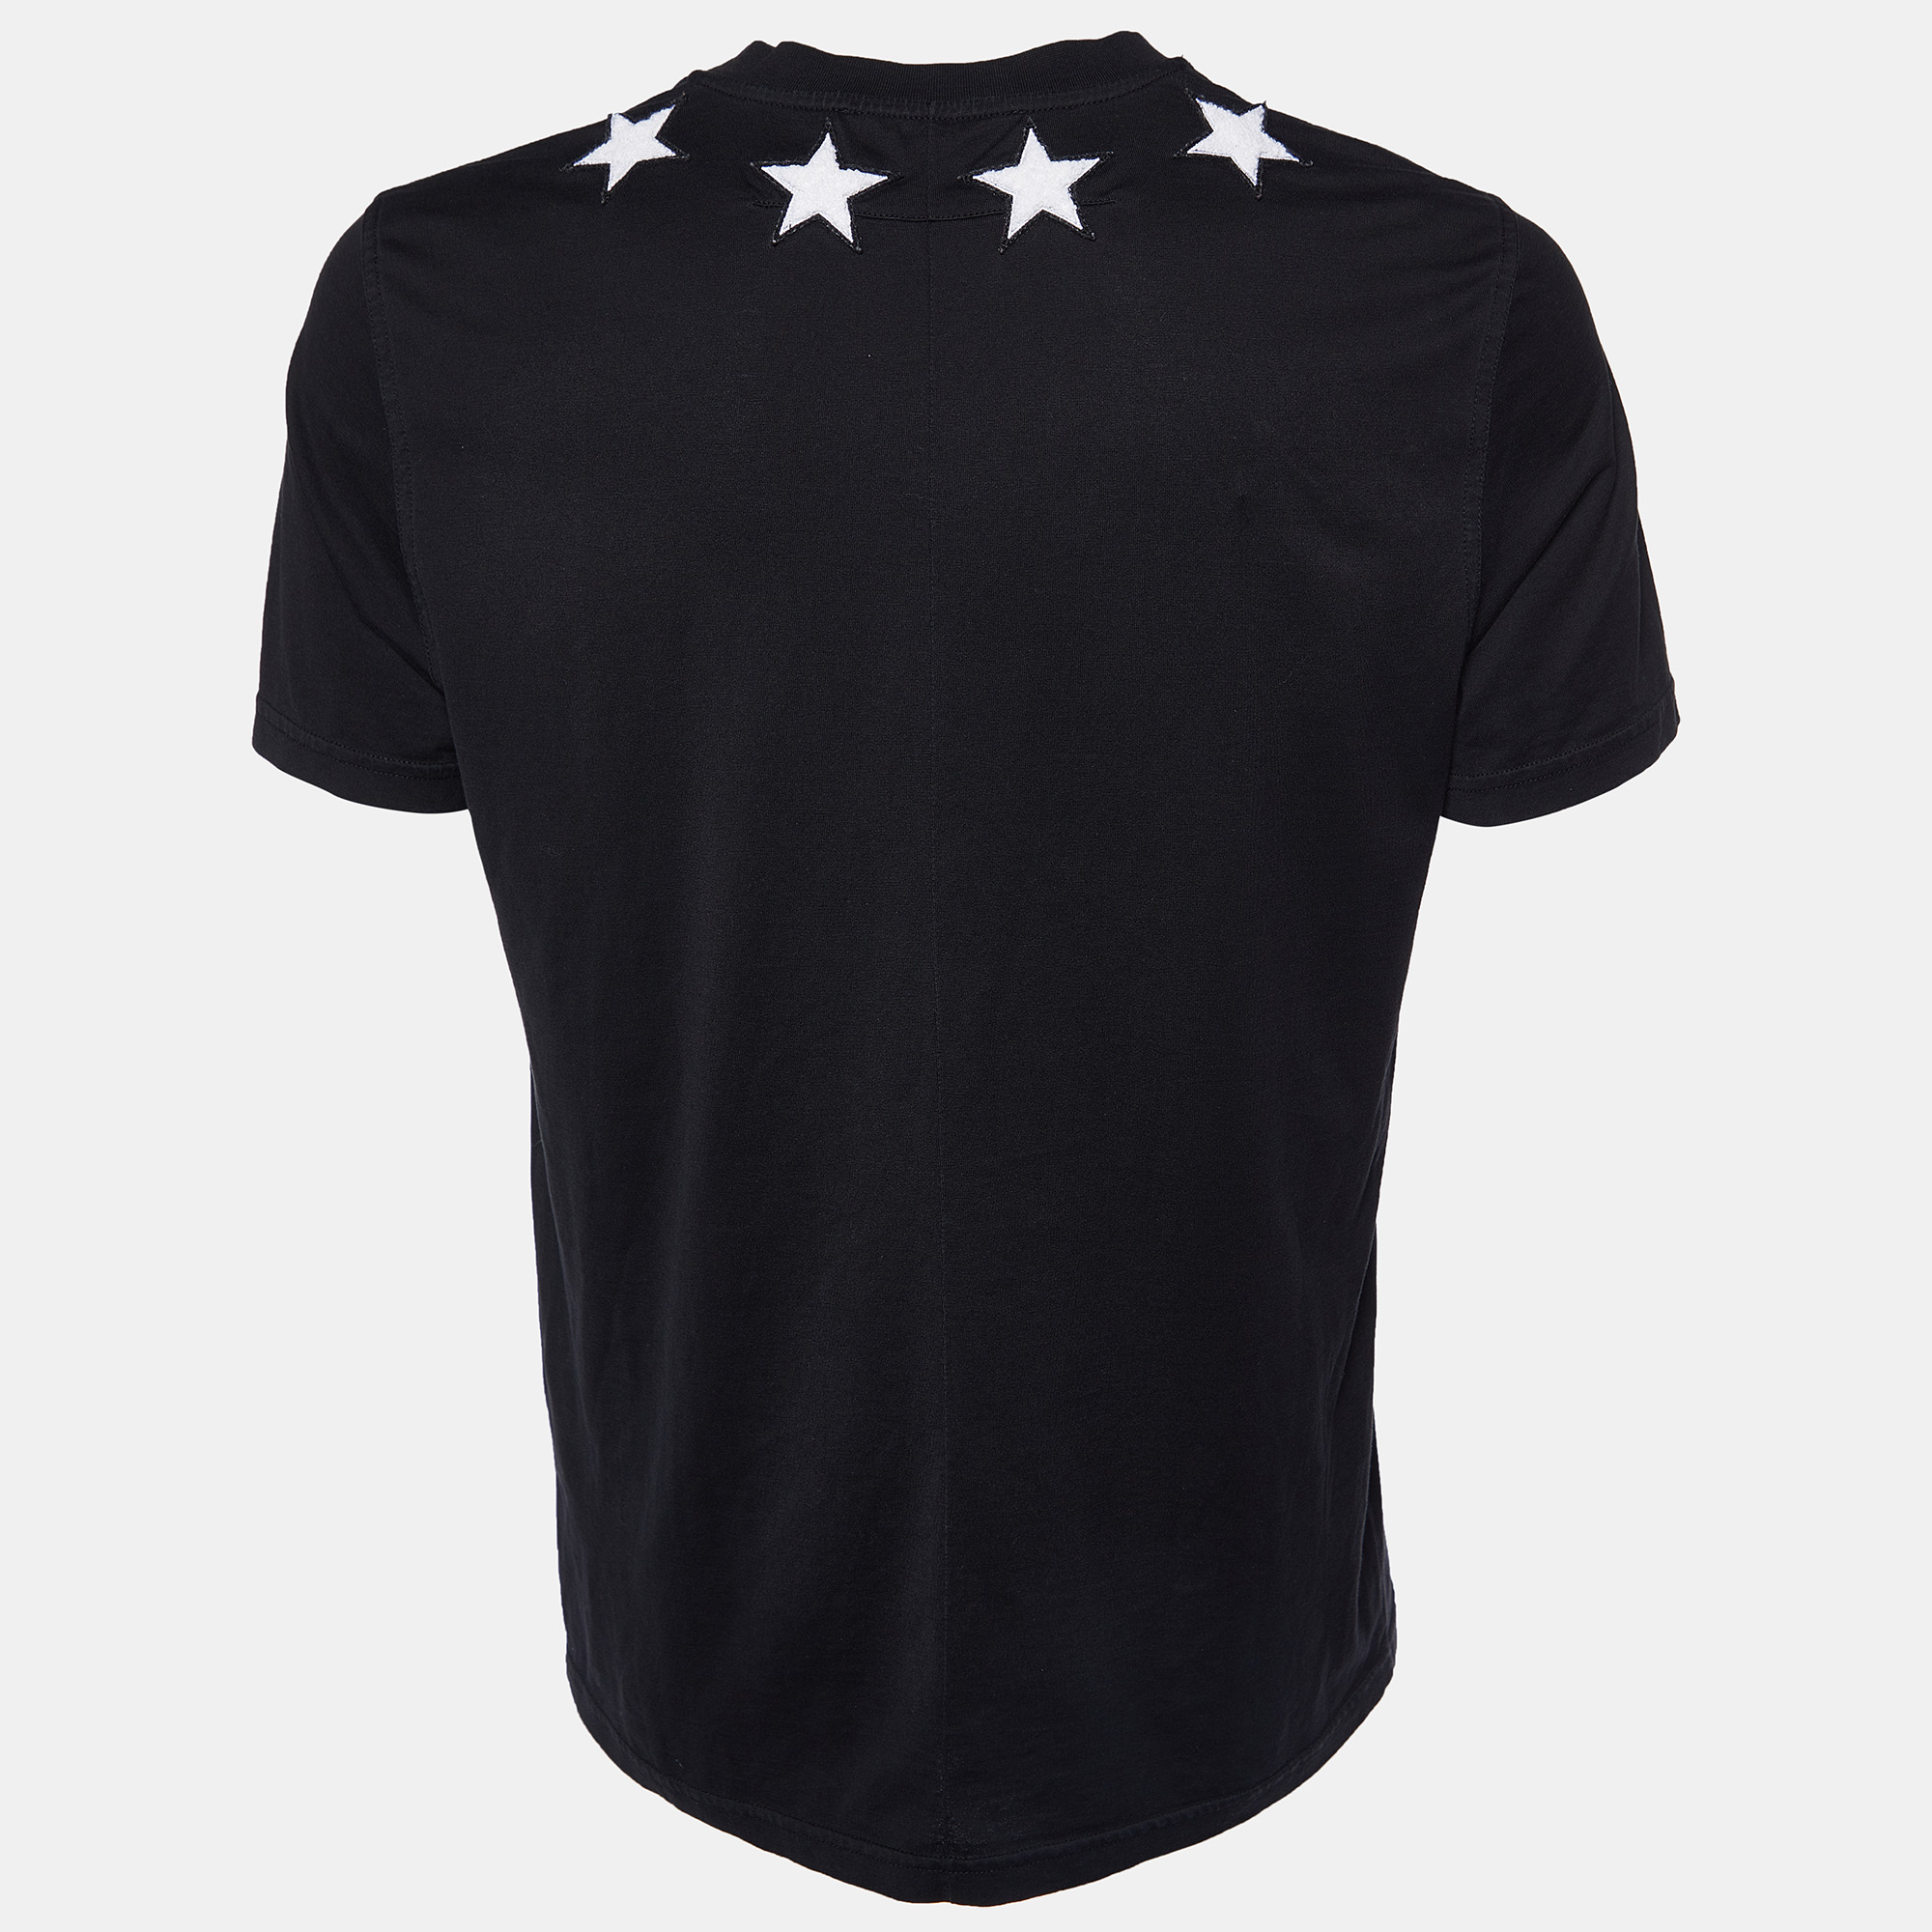 

Givenchy Black Stars Appliqued Cotton Cuban Fit T-Shirt